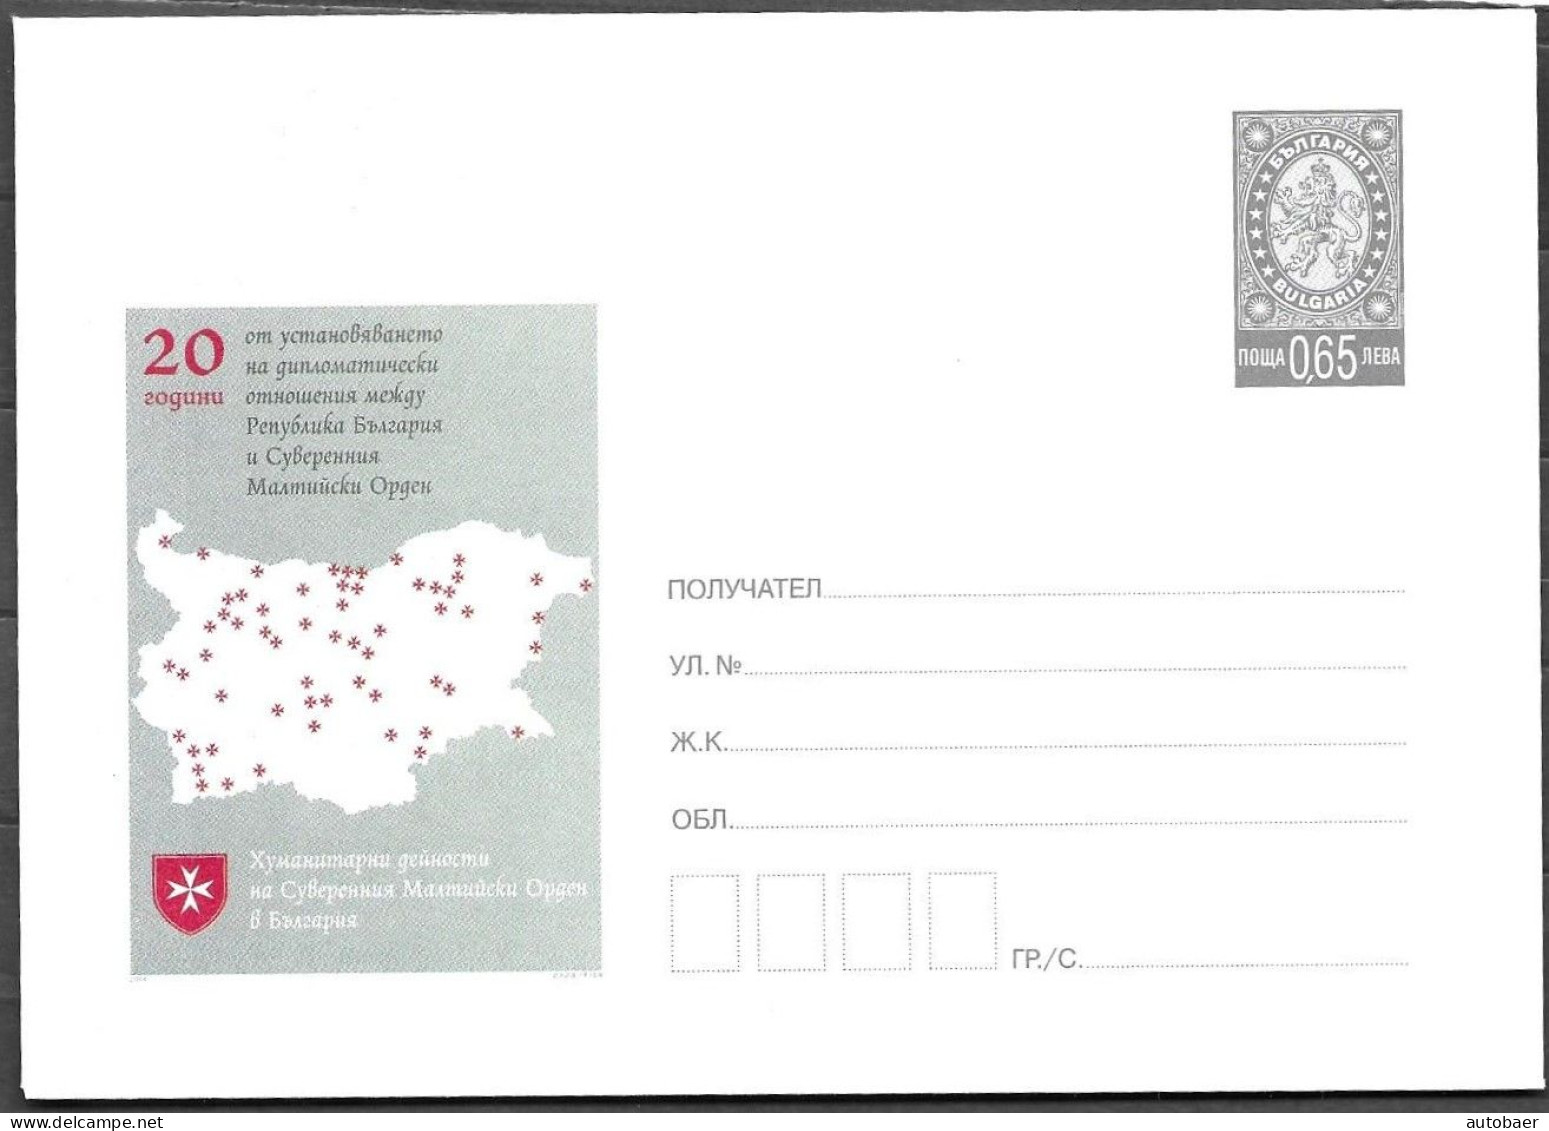 Bulgaria Bulgarie Bulgarien Envelope 2014 Diplomatic Relations With Order Of Malta ** MNH Neuf Postfrisch - Omslagen